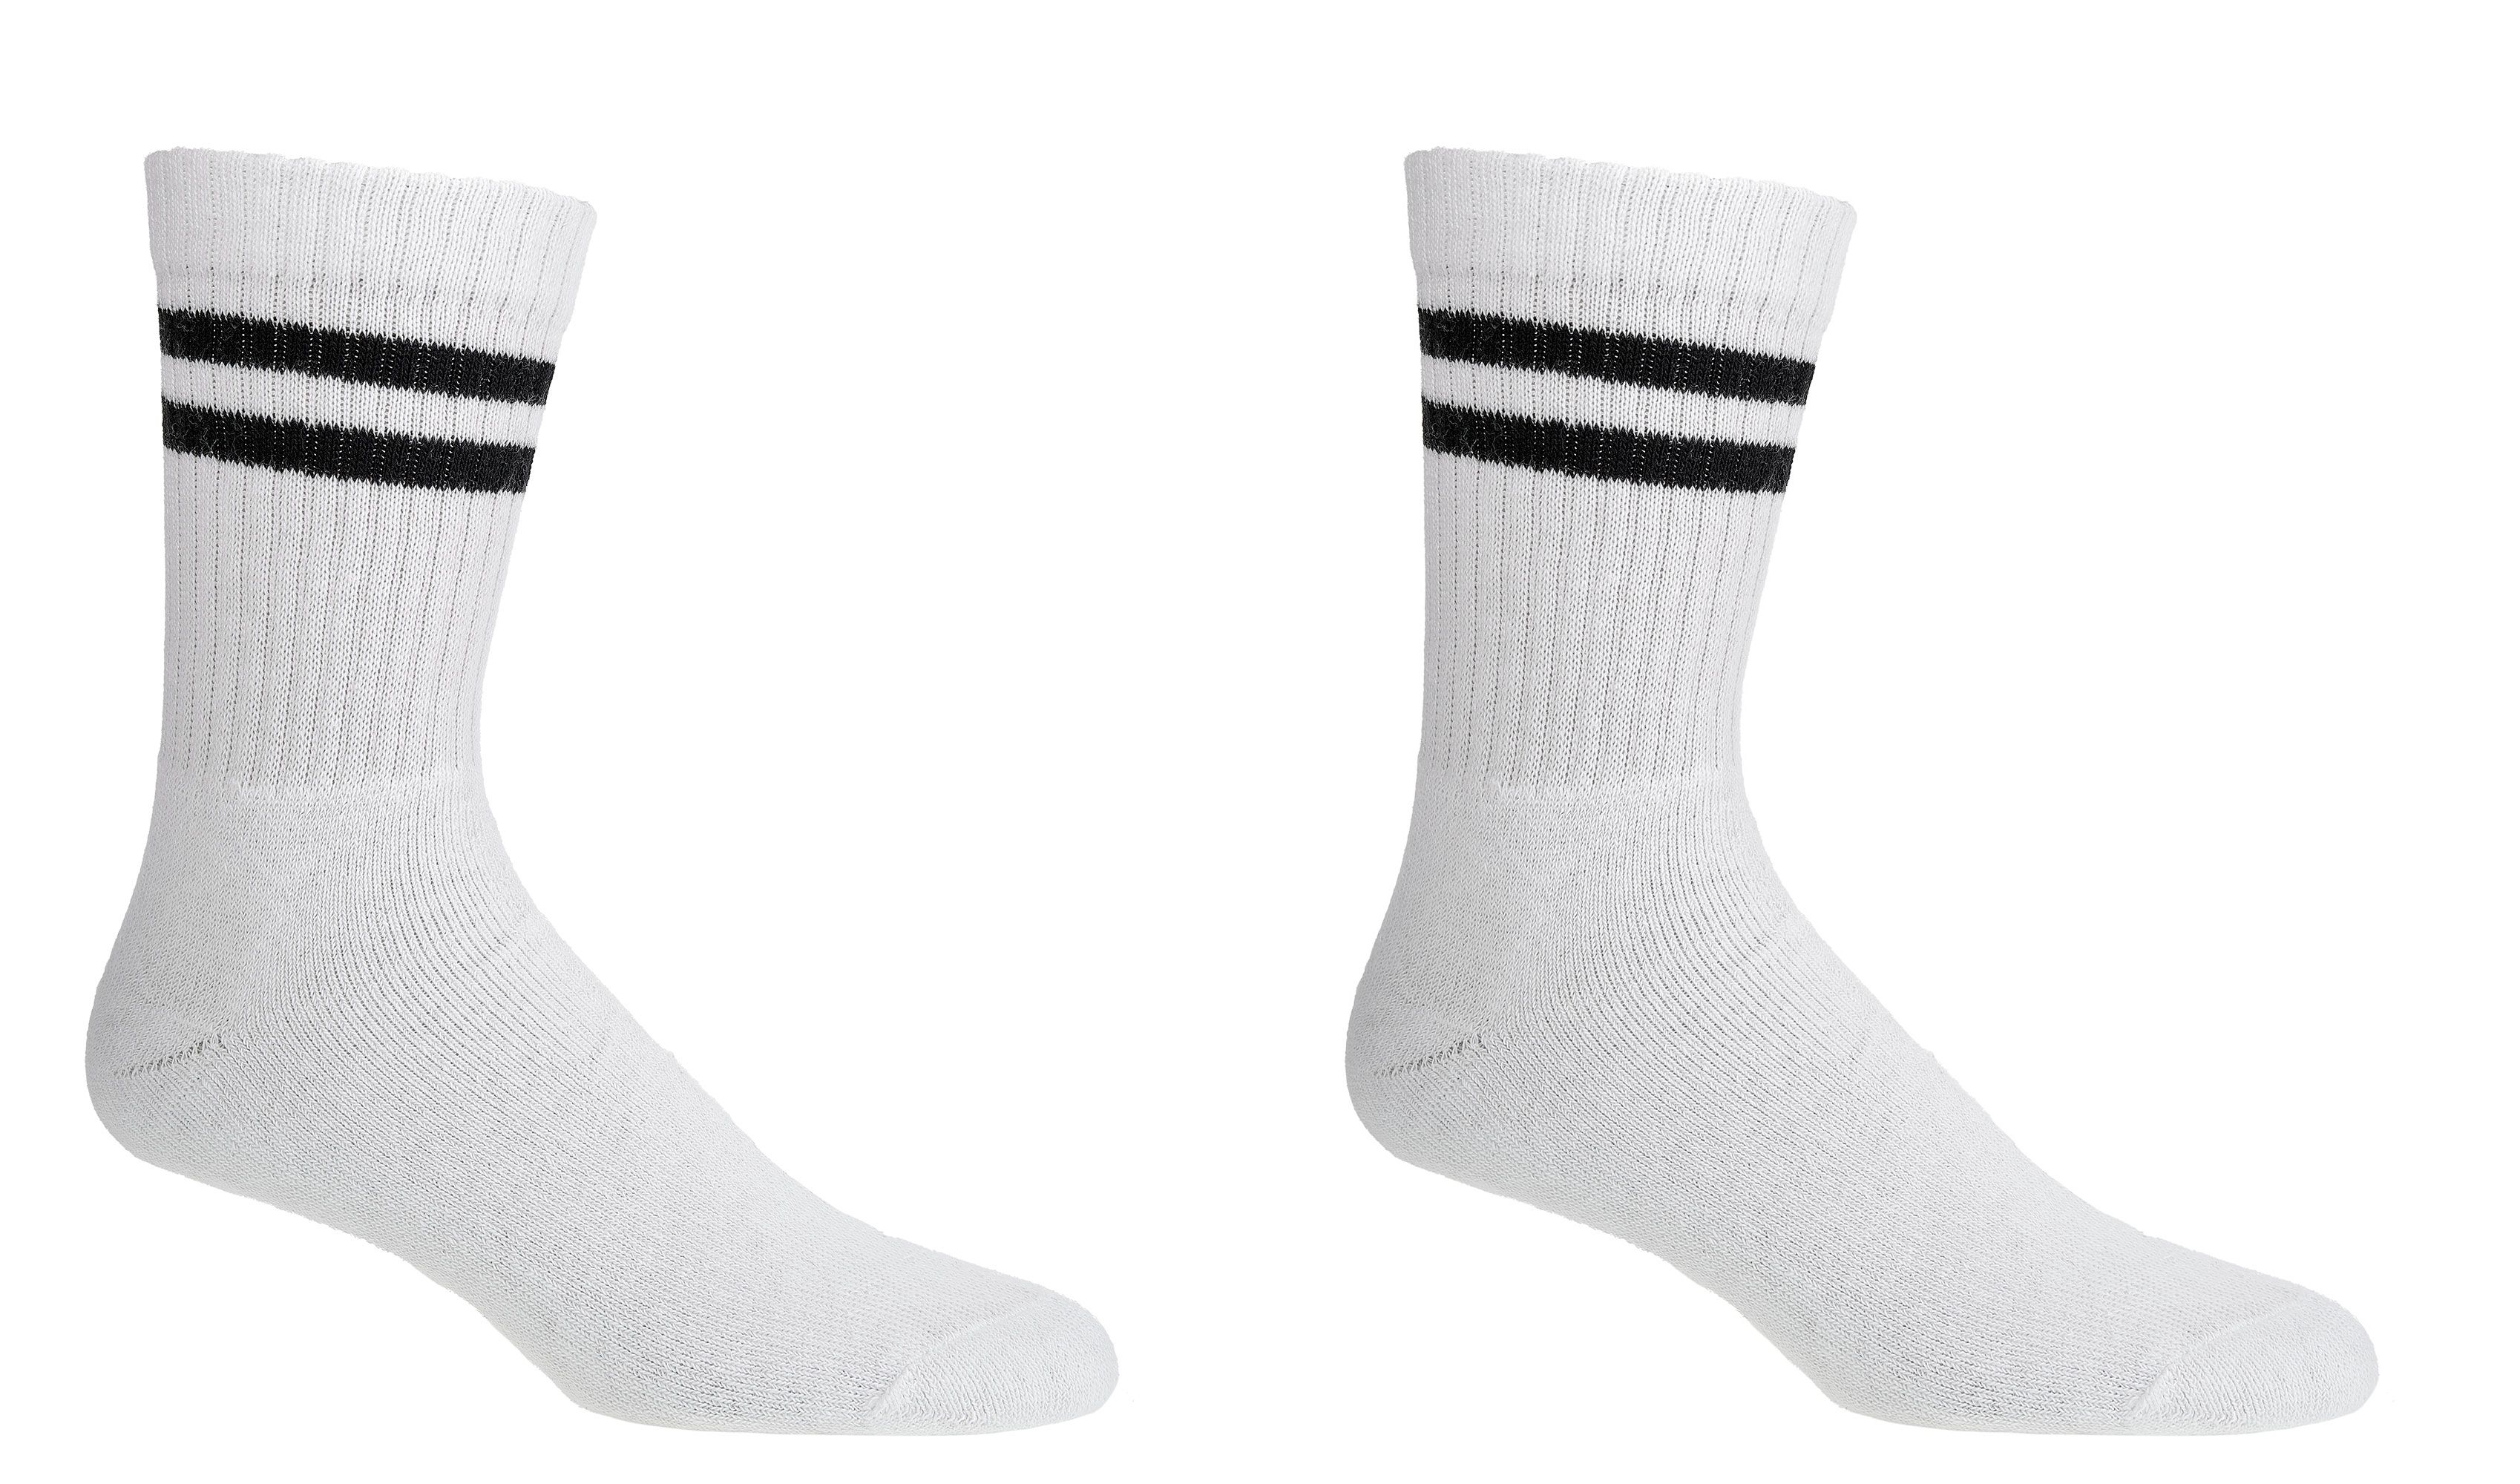  Sport-Socken  CREW SOCKS  für Teenager, Damen und Herren 2 Paar